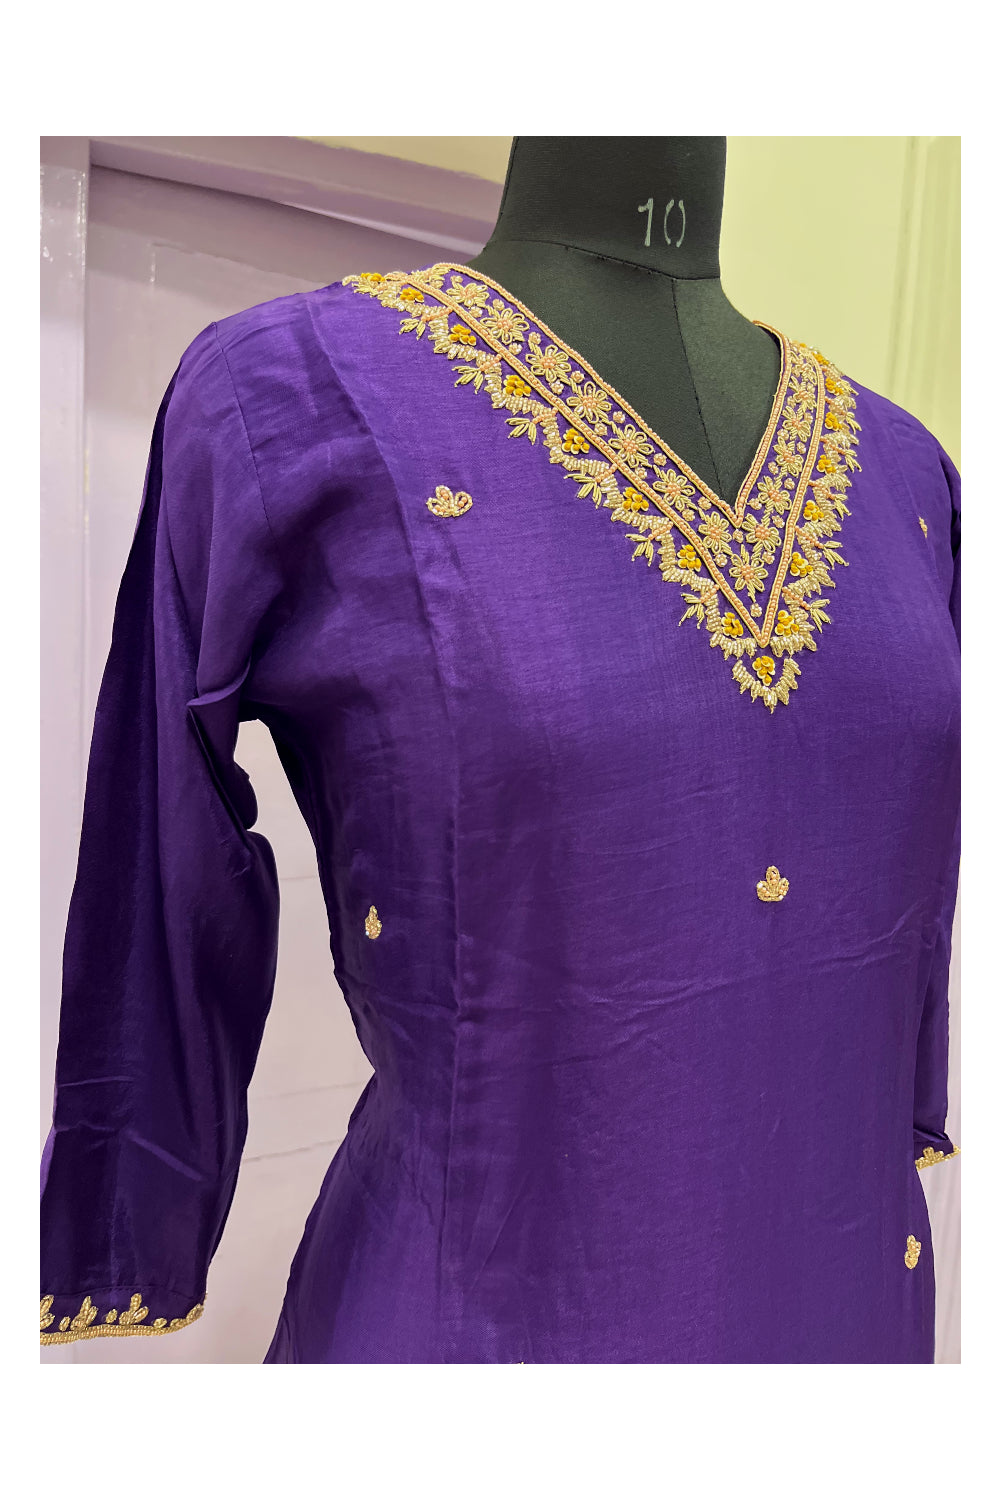 Southloom Stitched Semi Silk Salwar Set in Violet and Butta Butta Works